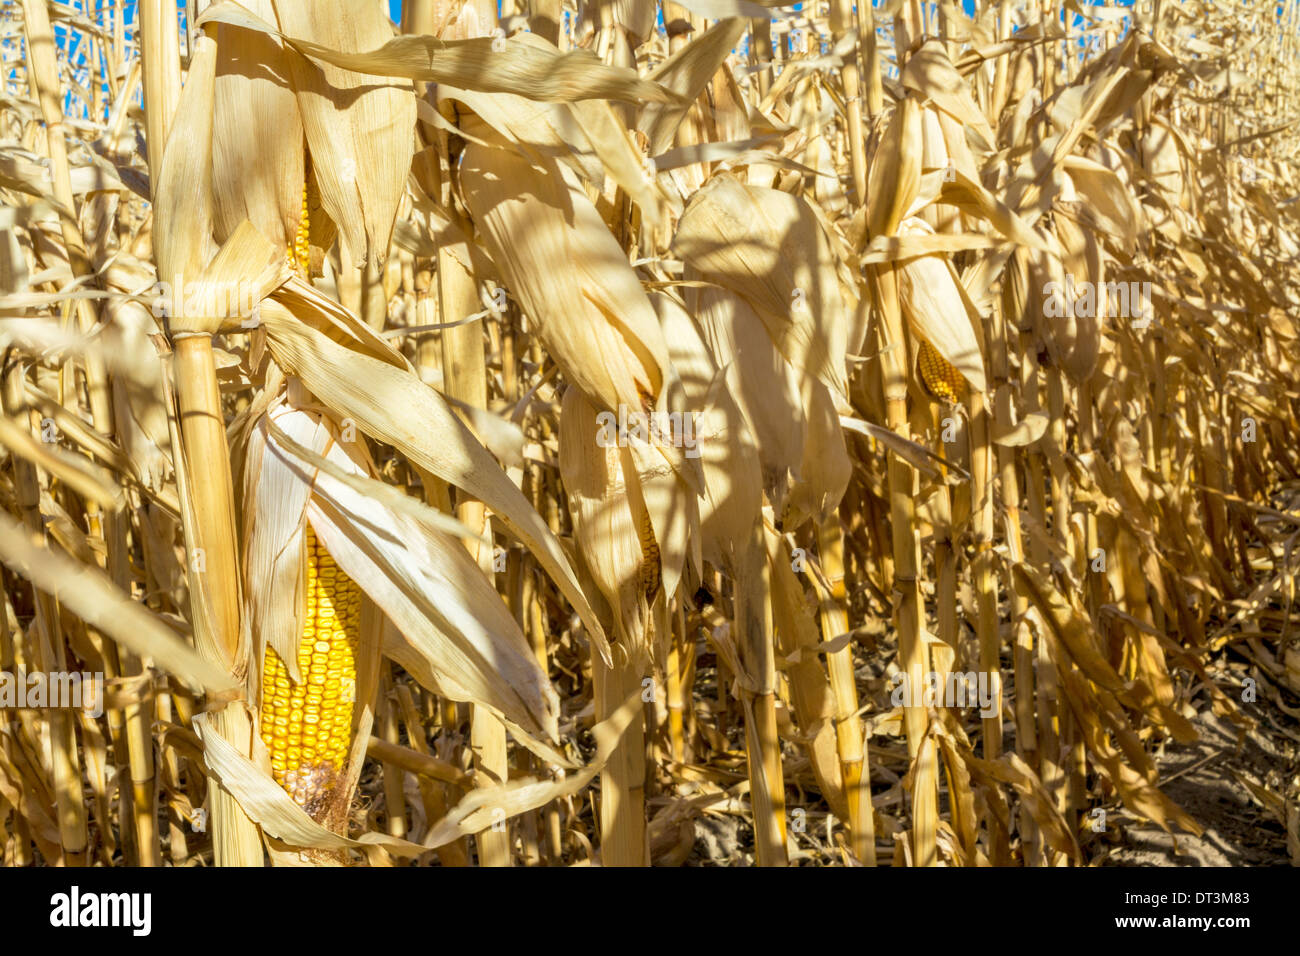 Corn stalks in the wind Stock Photo